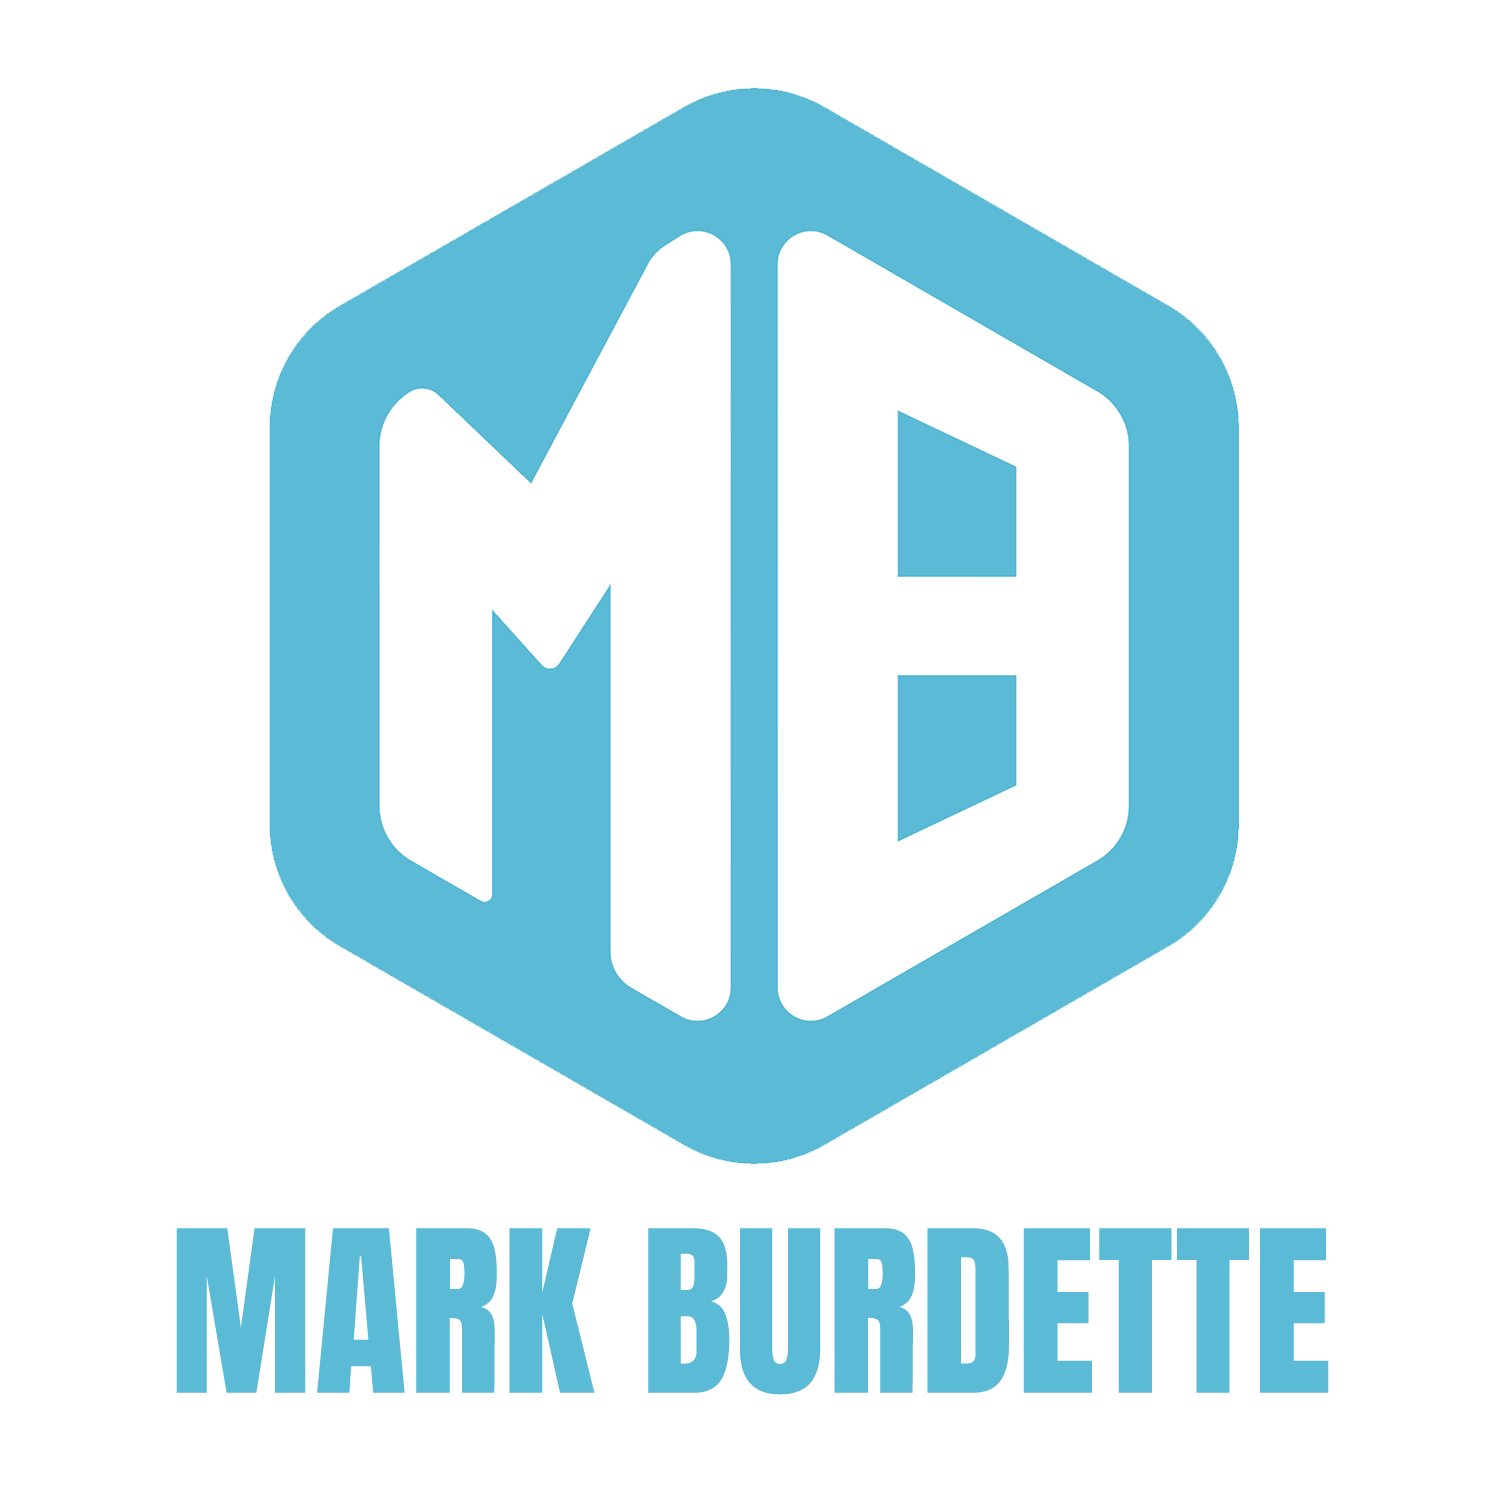 Mark Burdette: Small Business Coach and Consultant Logo